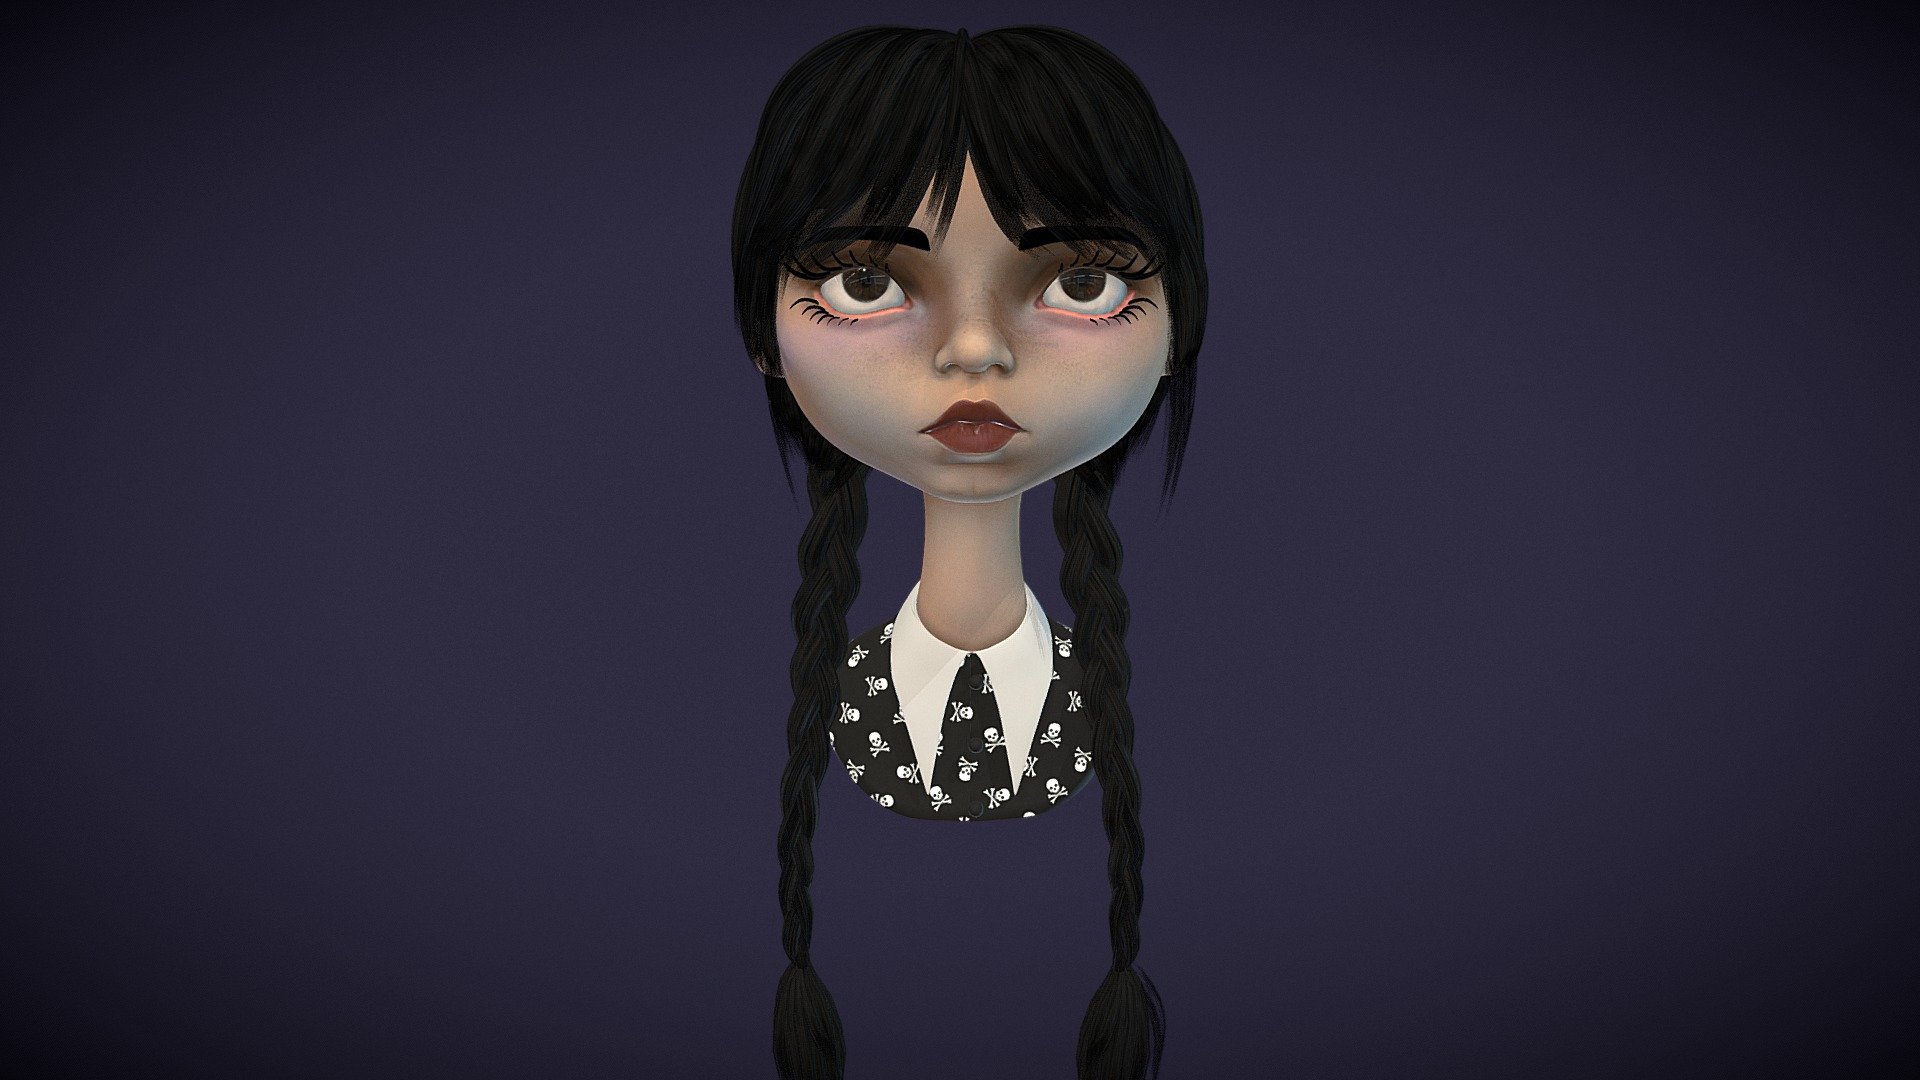 Wednesday Addams - Wednesday - 3D model by gokcenyuksek 3d model